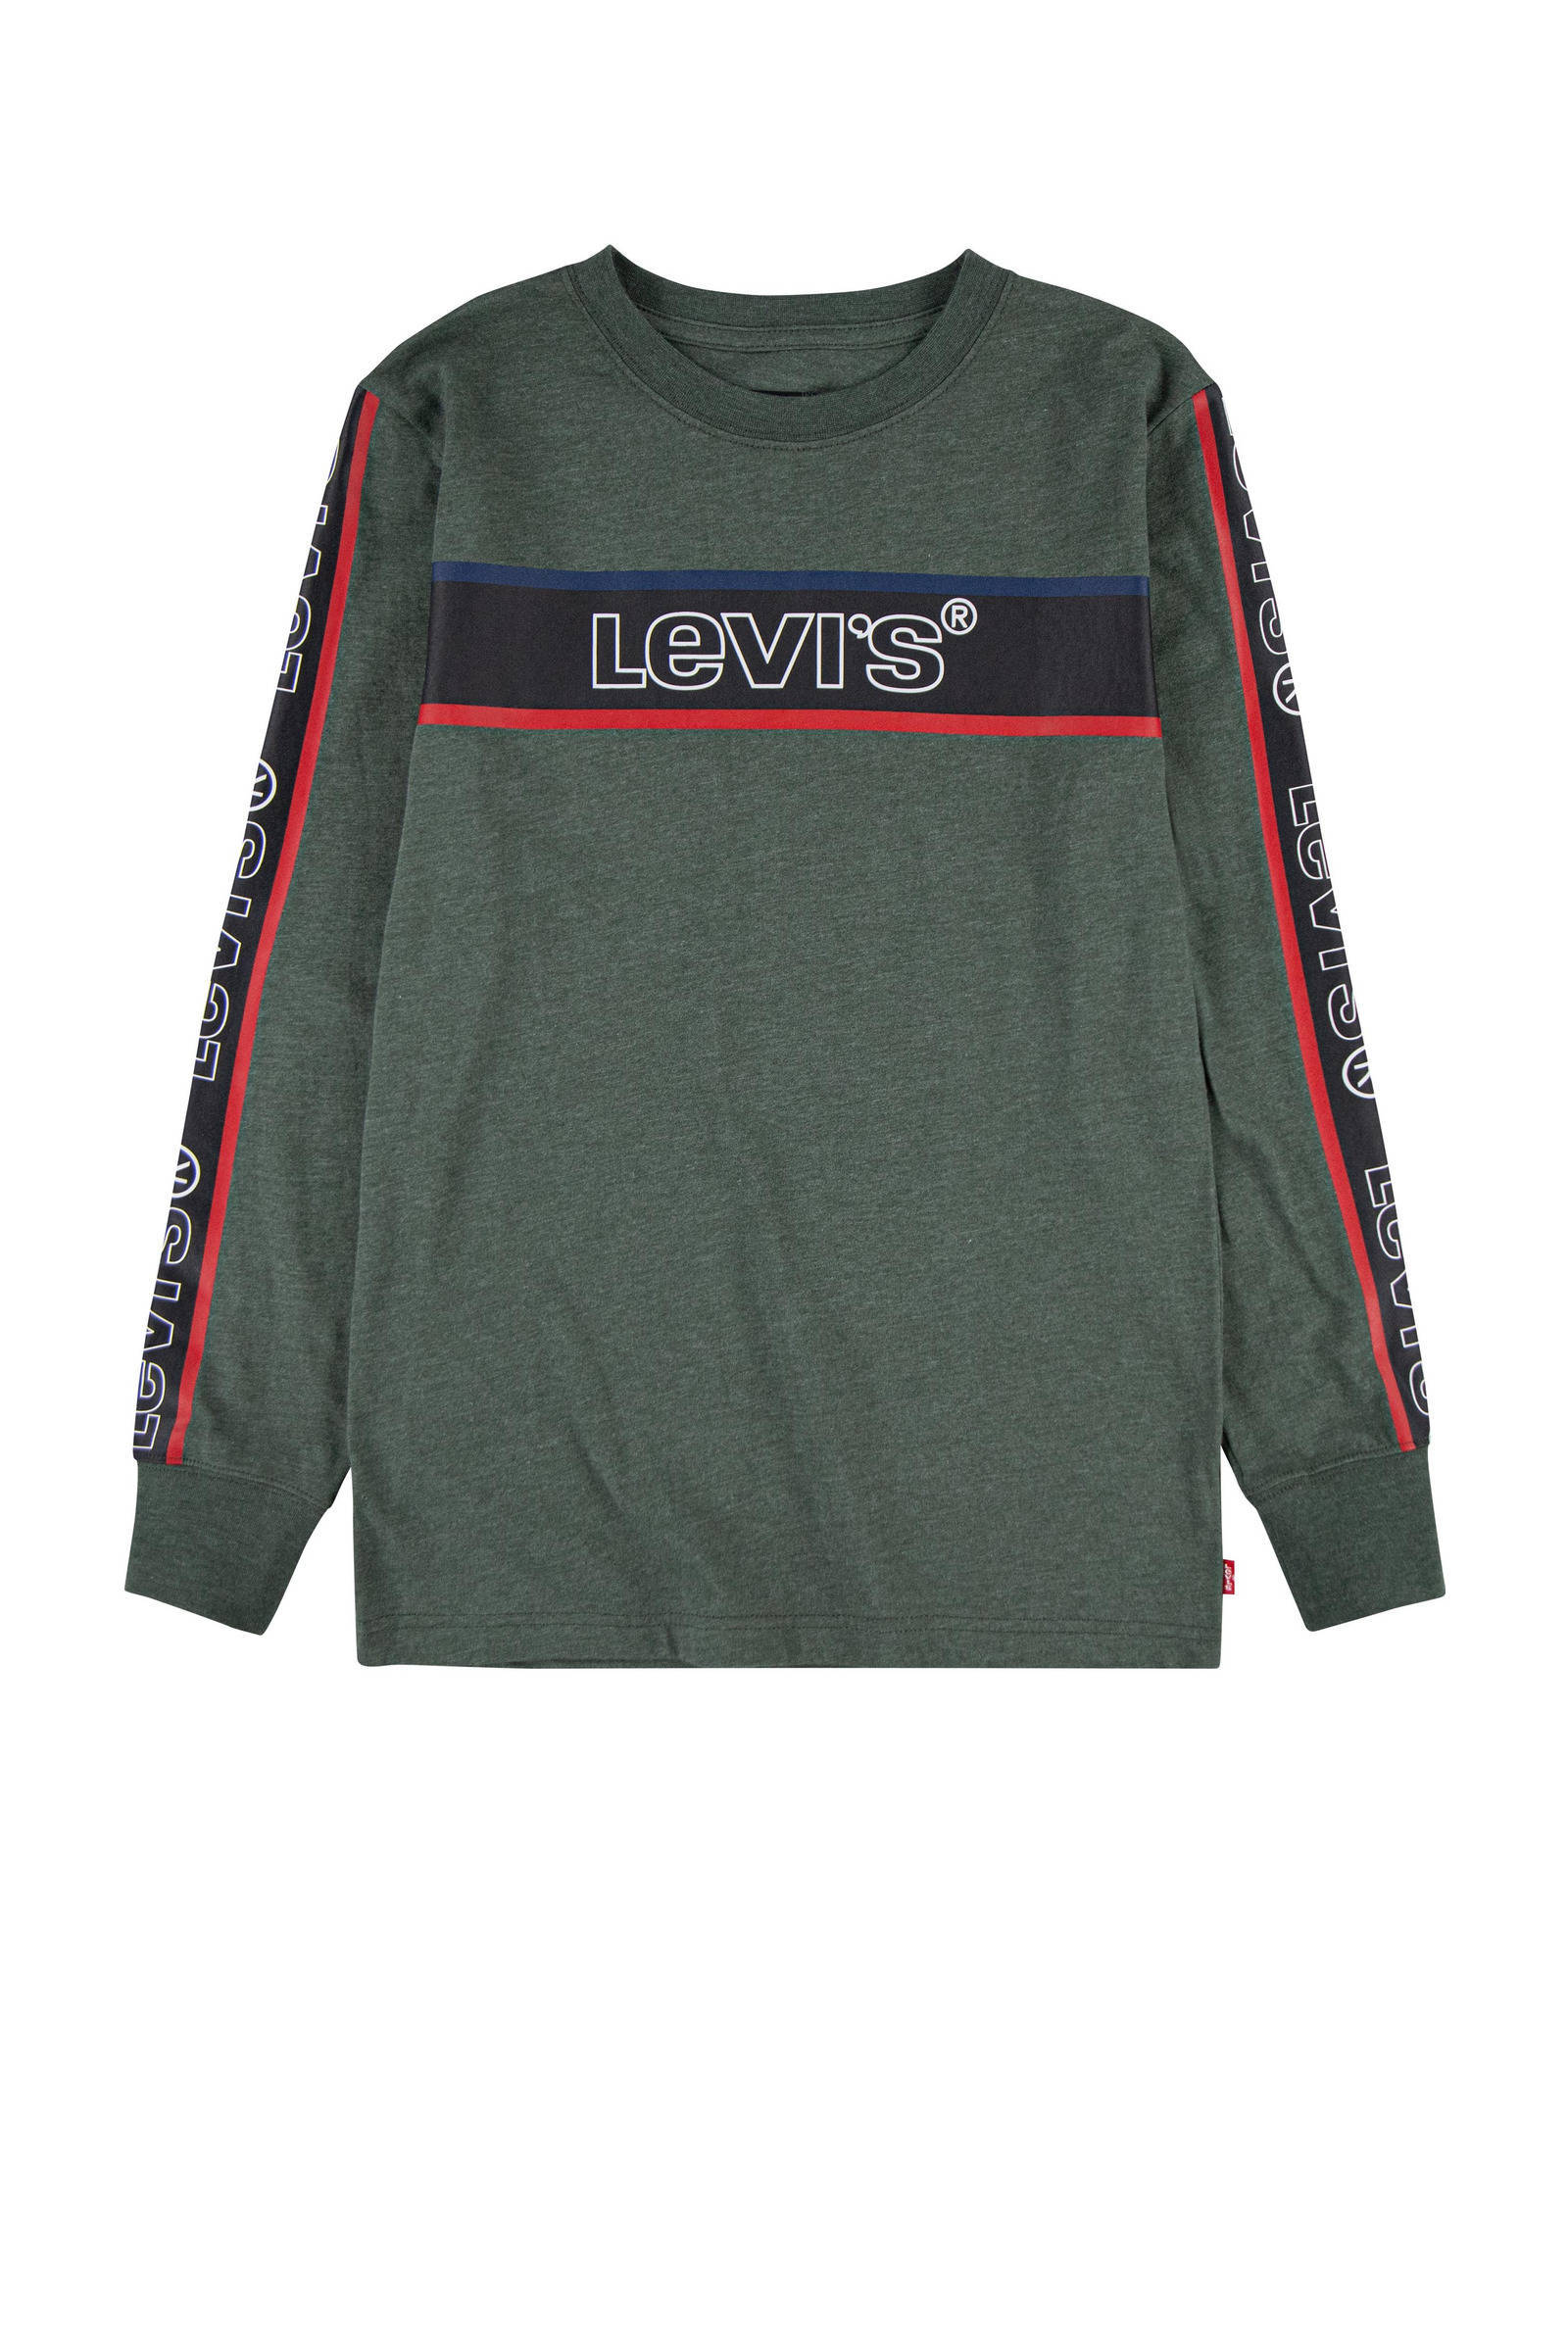 Levi's Kids longsleeve Graphic met contrastbies army groen online kopen